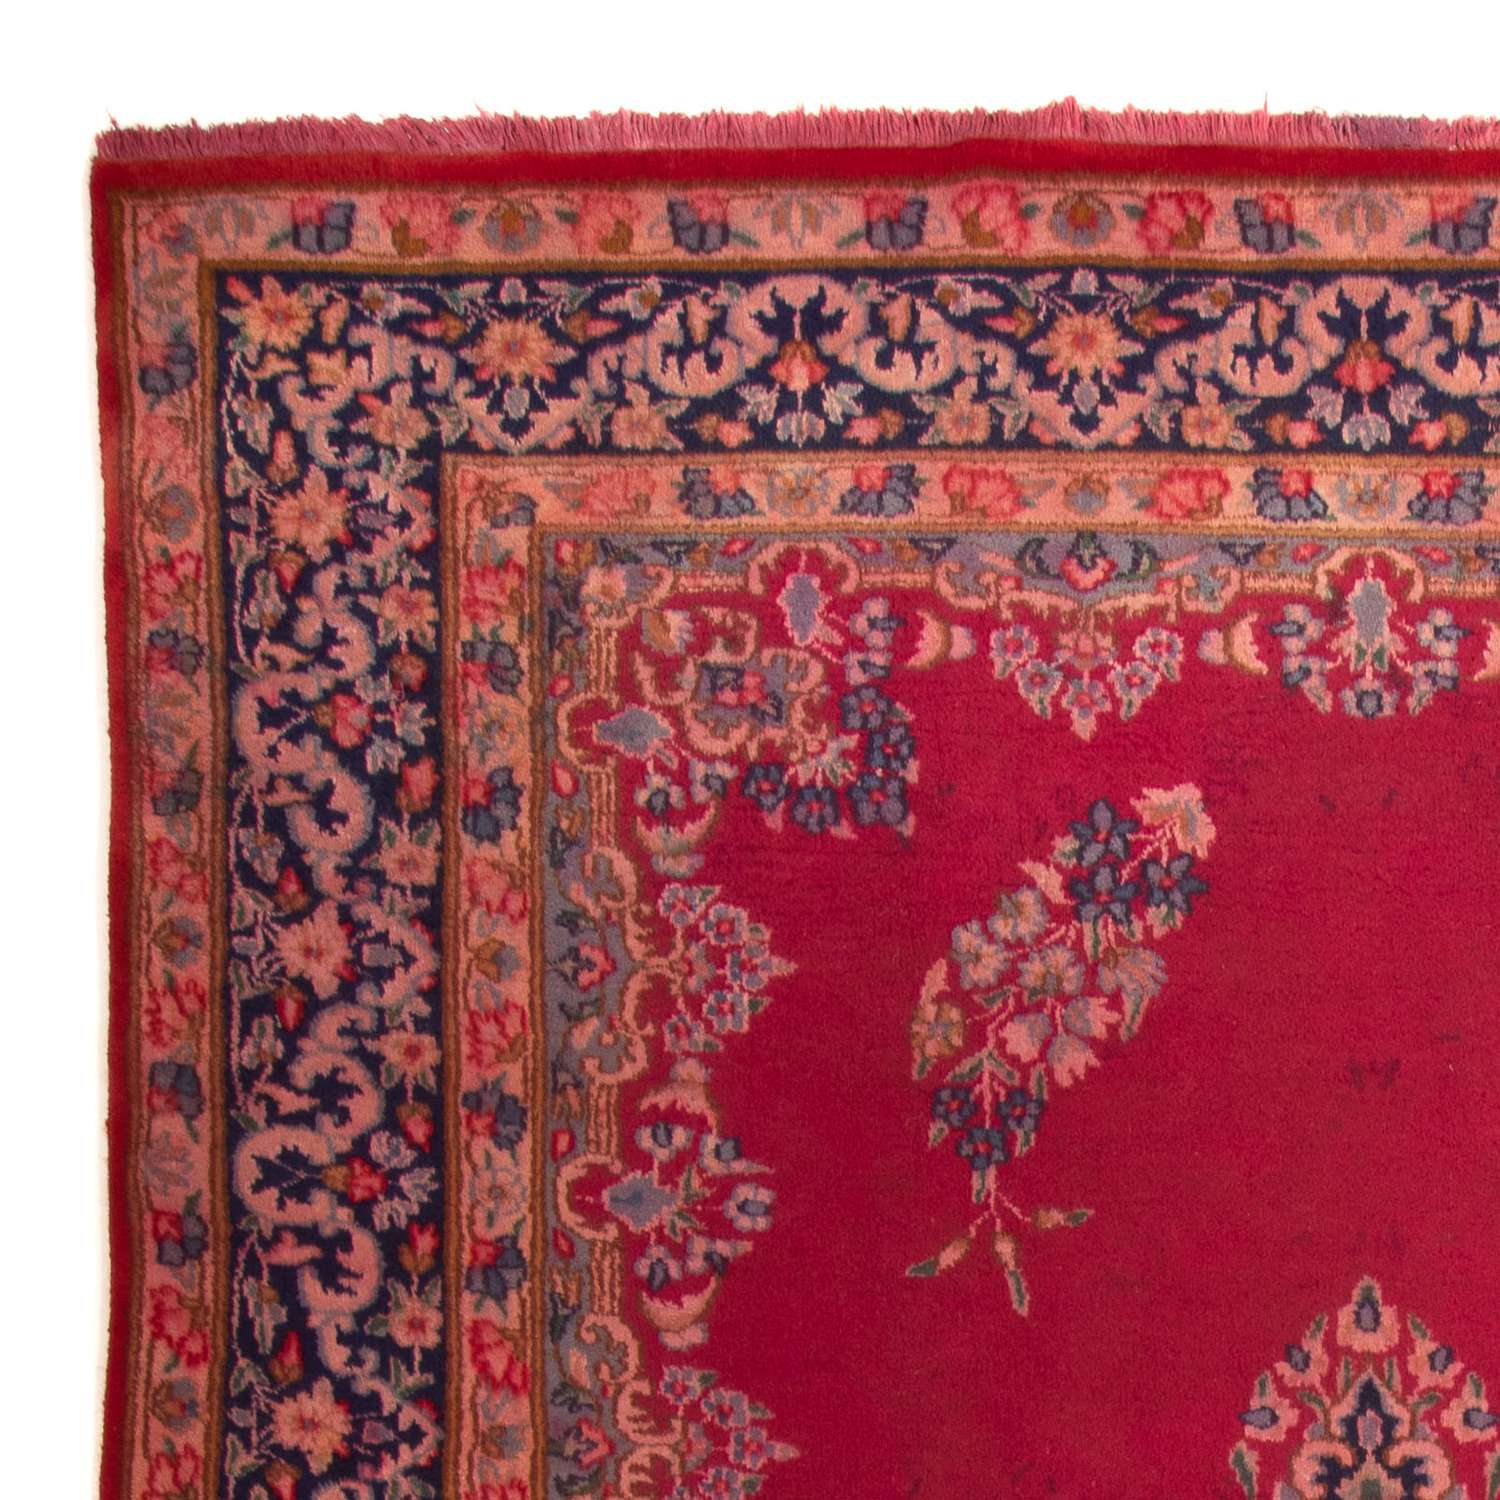 Tapis persan - Classique - 330 x 235 cm - rouge